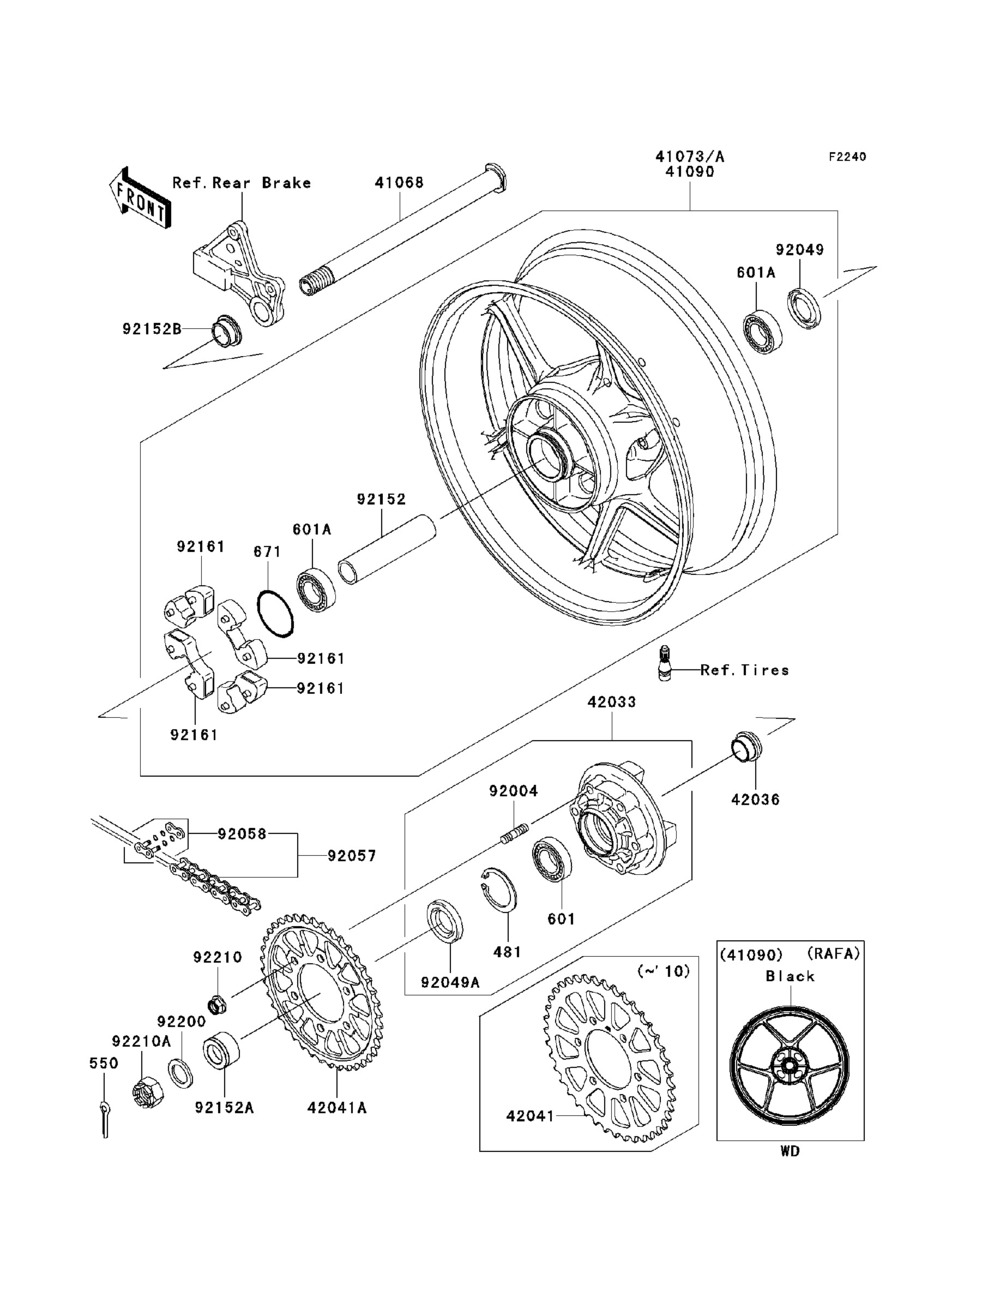 Rear wheel  chain